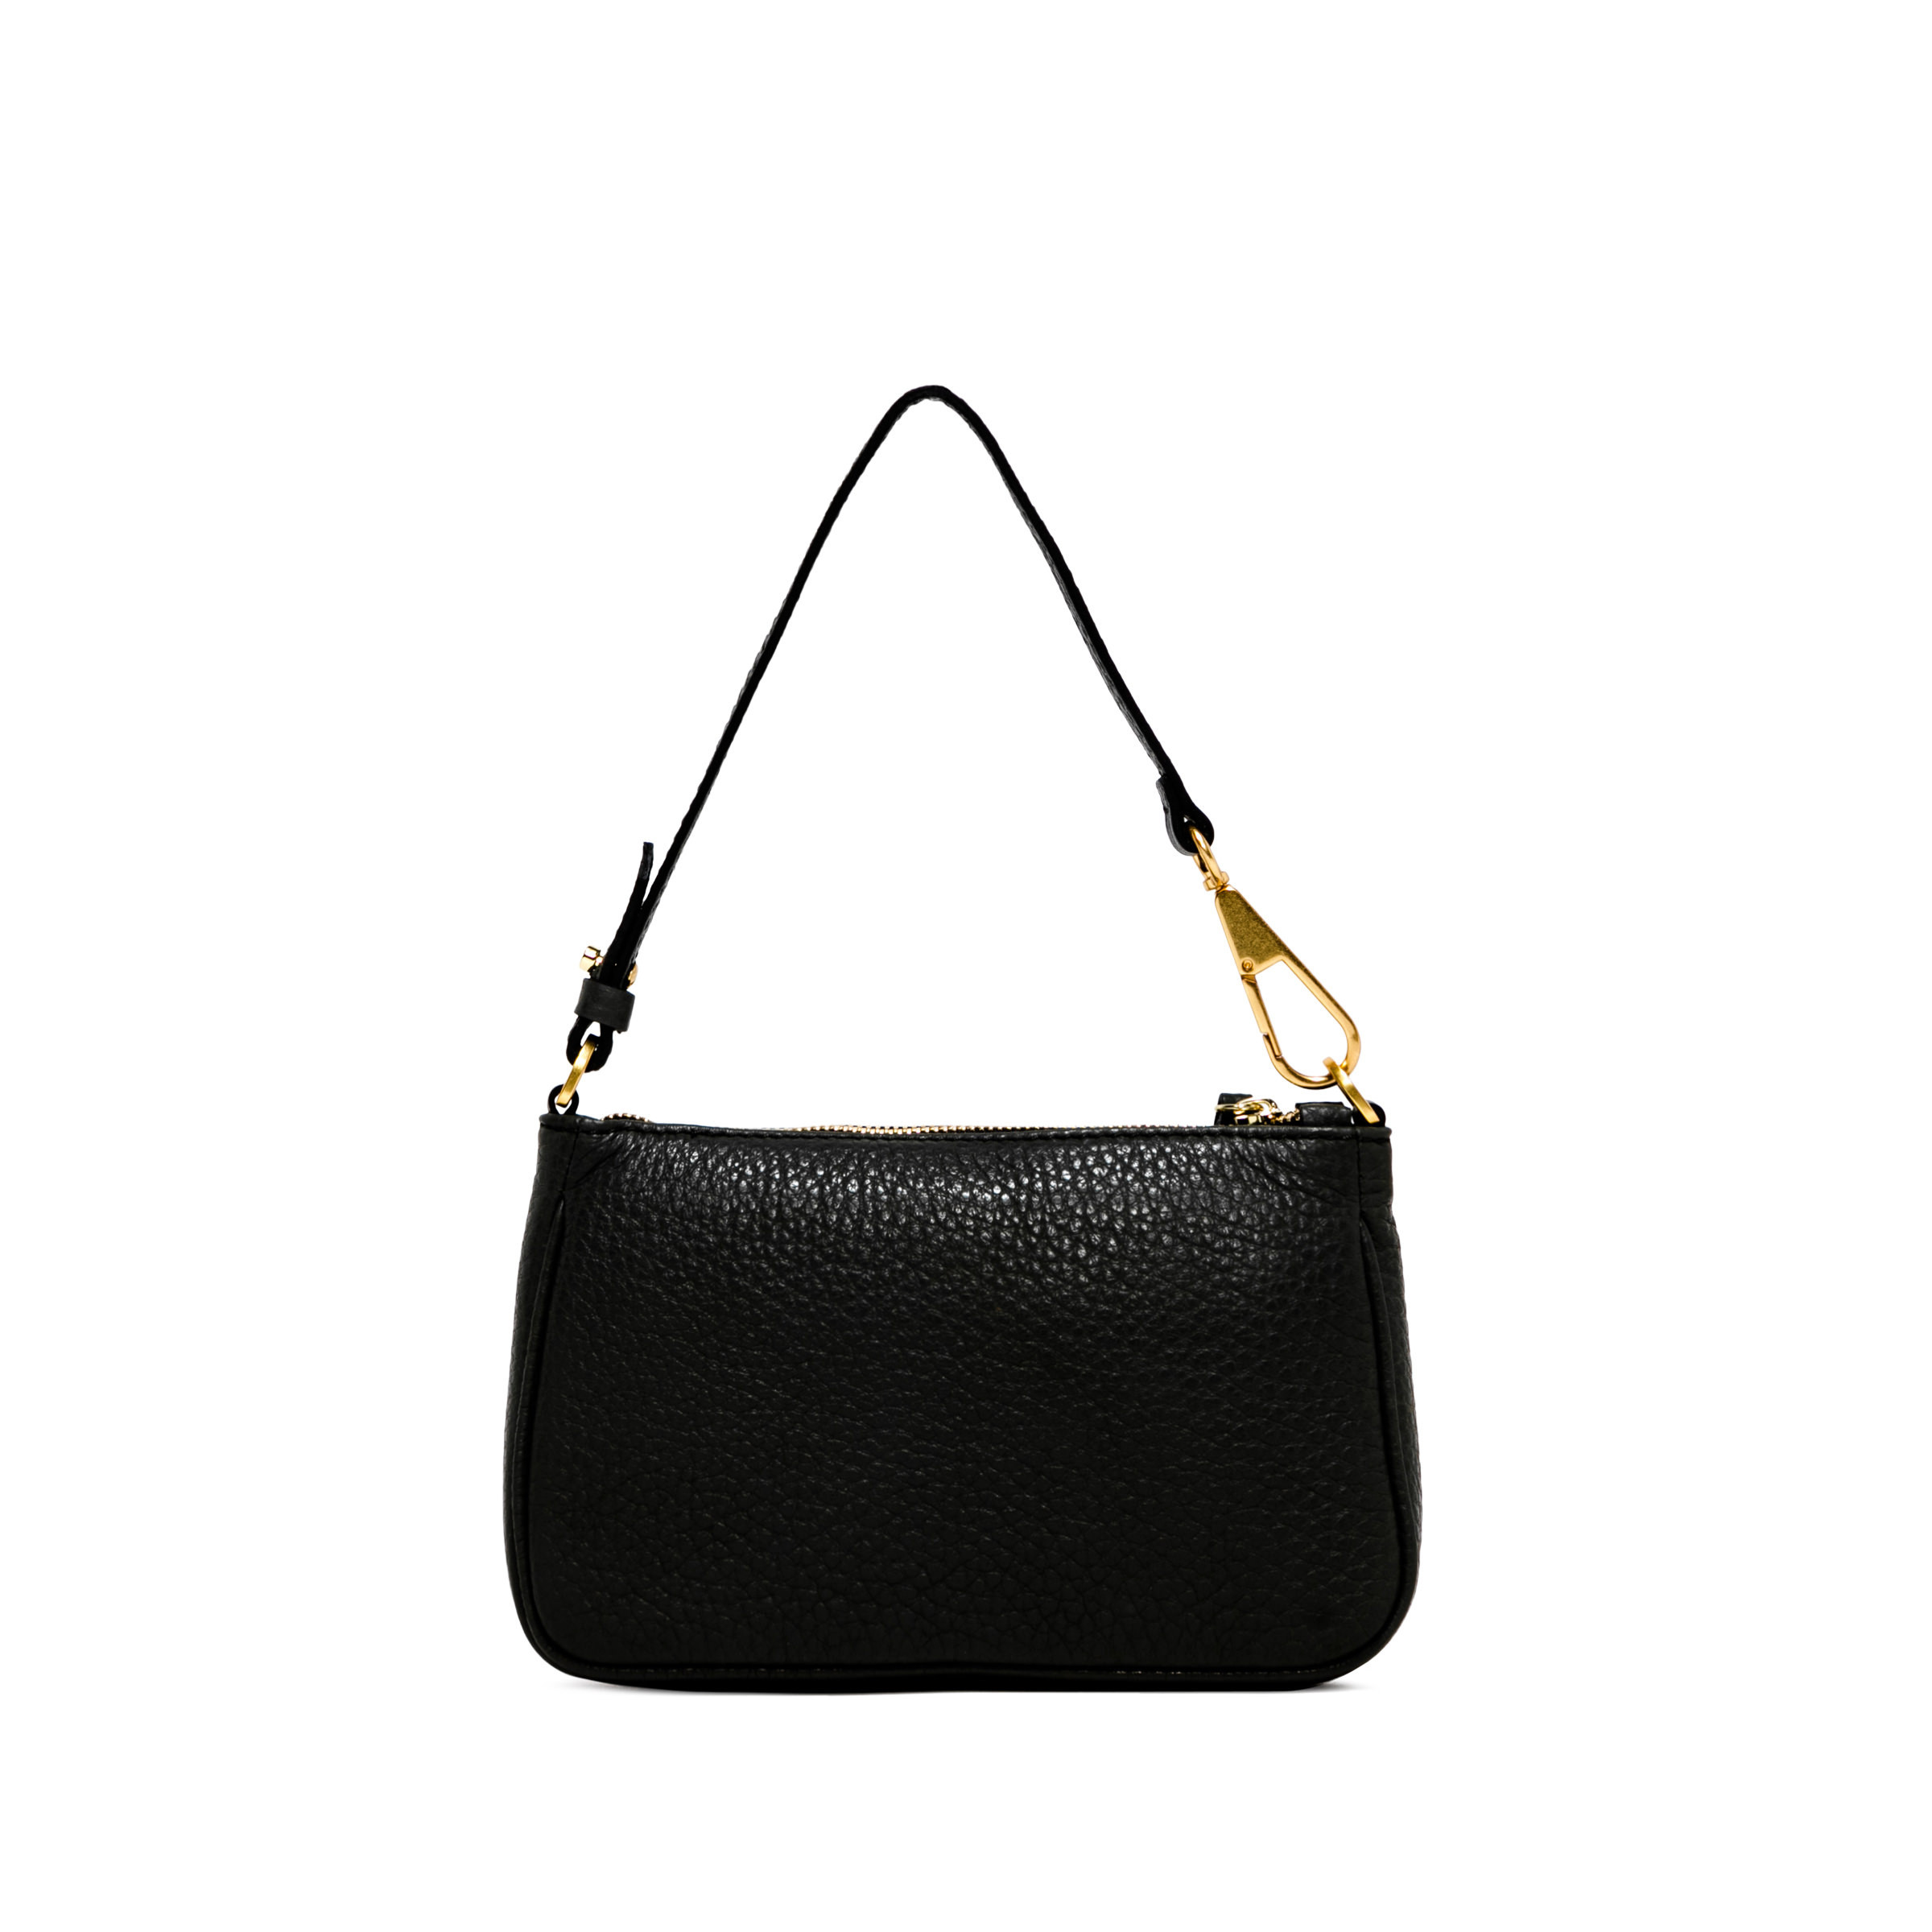 Gianni Chiarini - Brooke bag in leather, Black, large image number 2